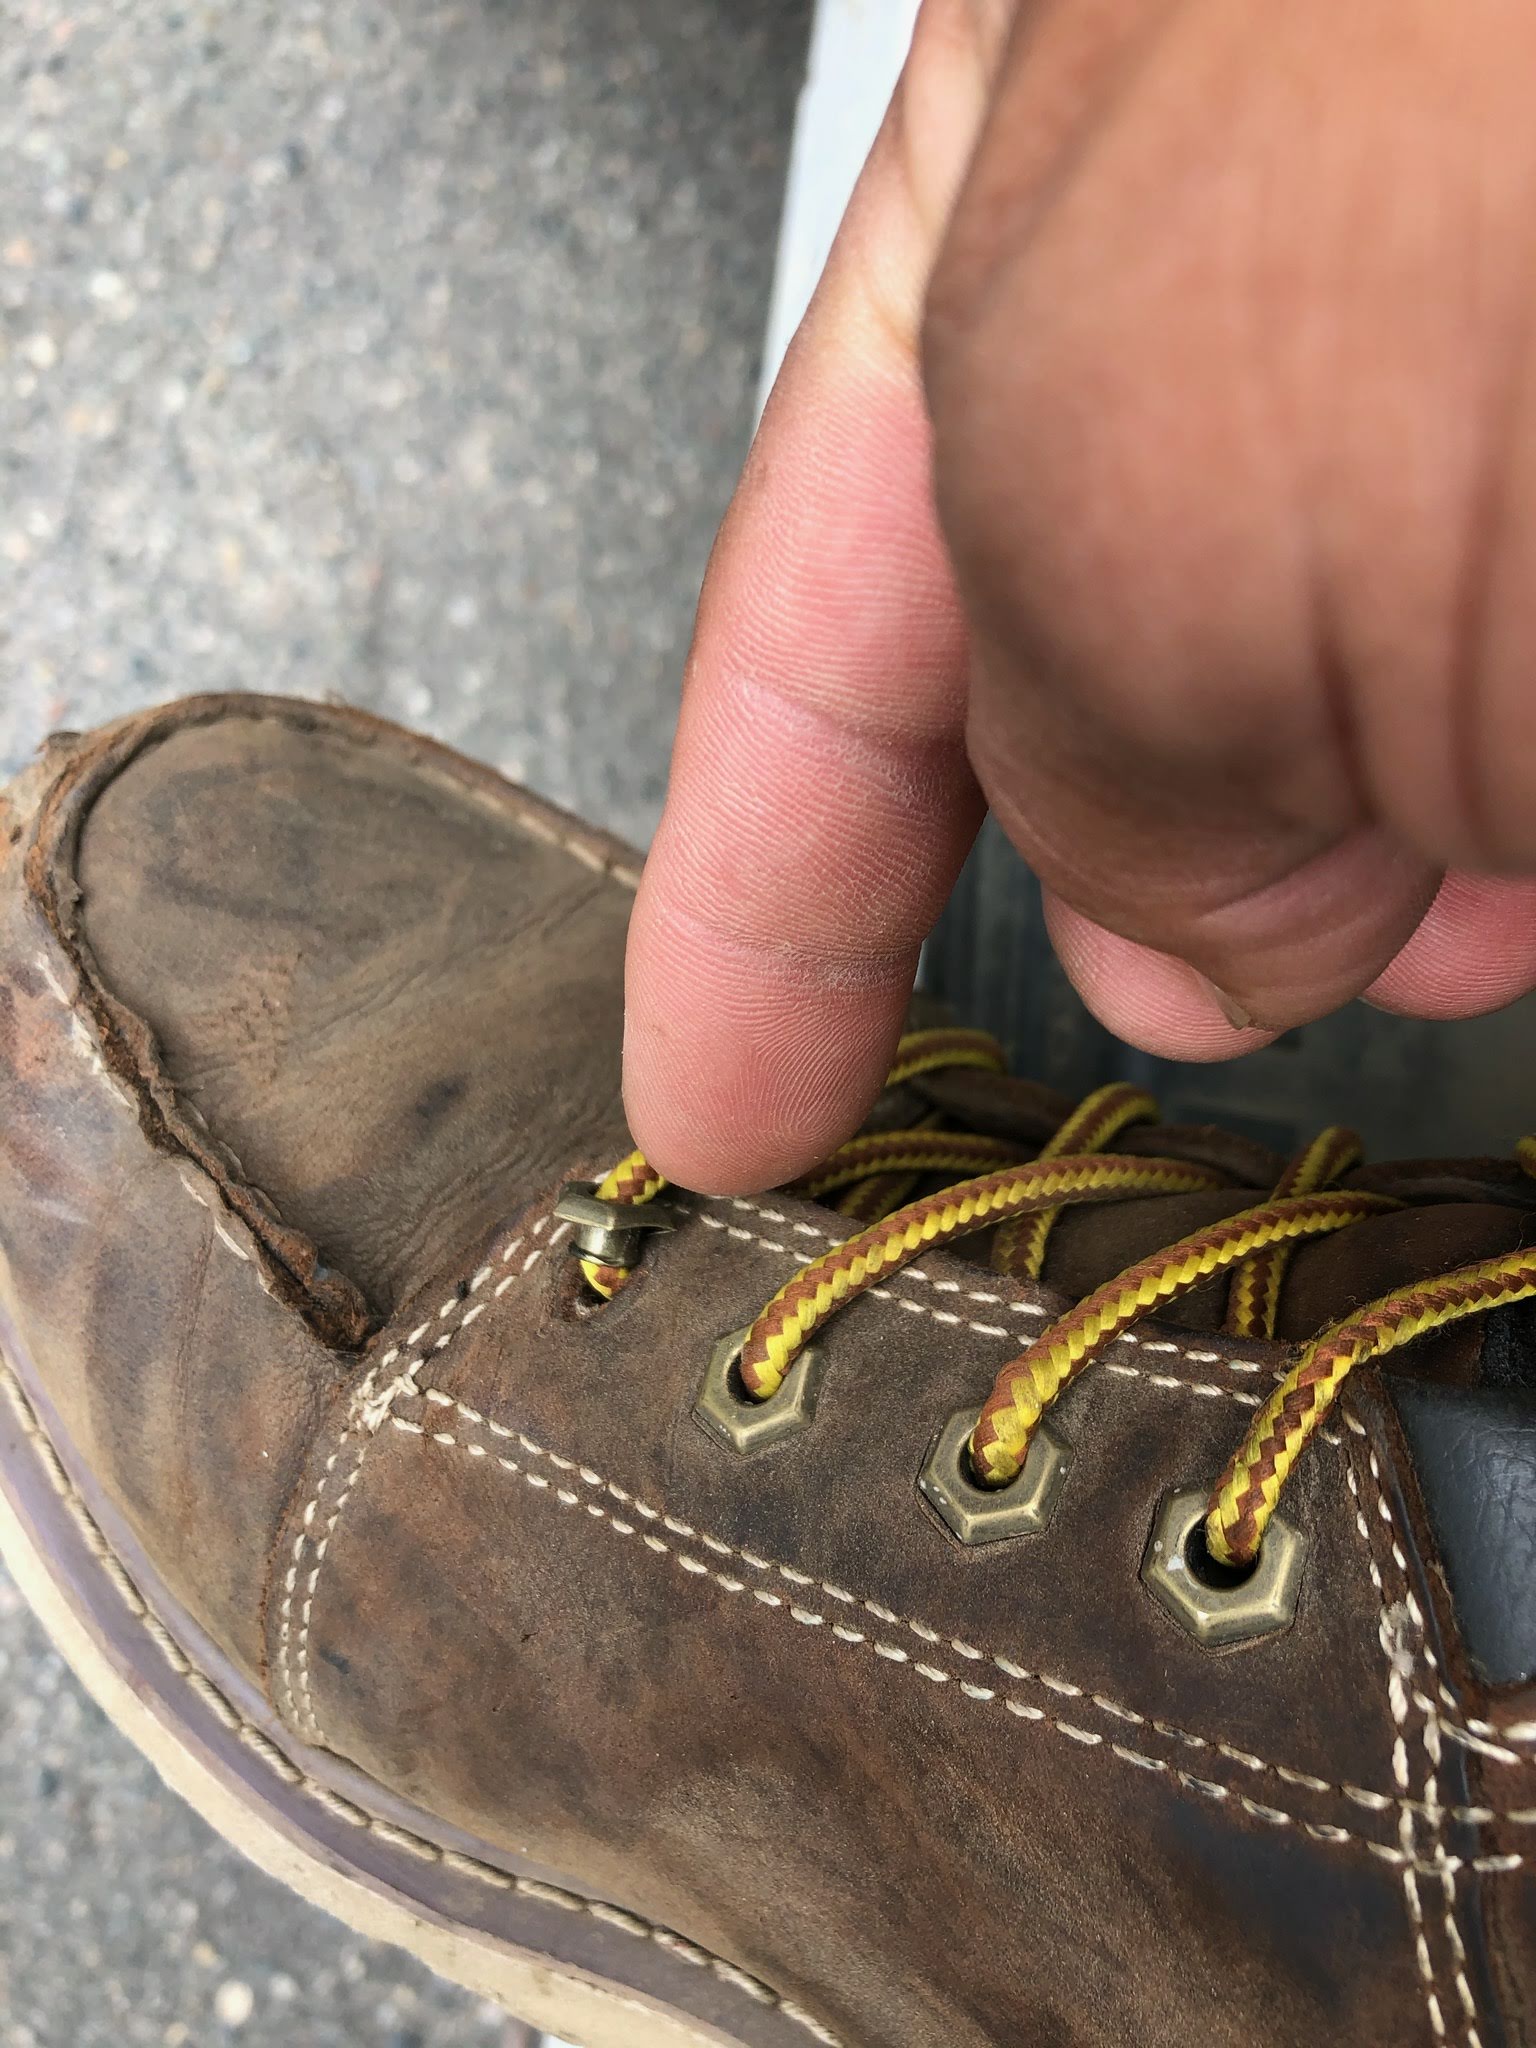 caterpillar tradesman boots